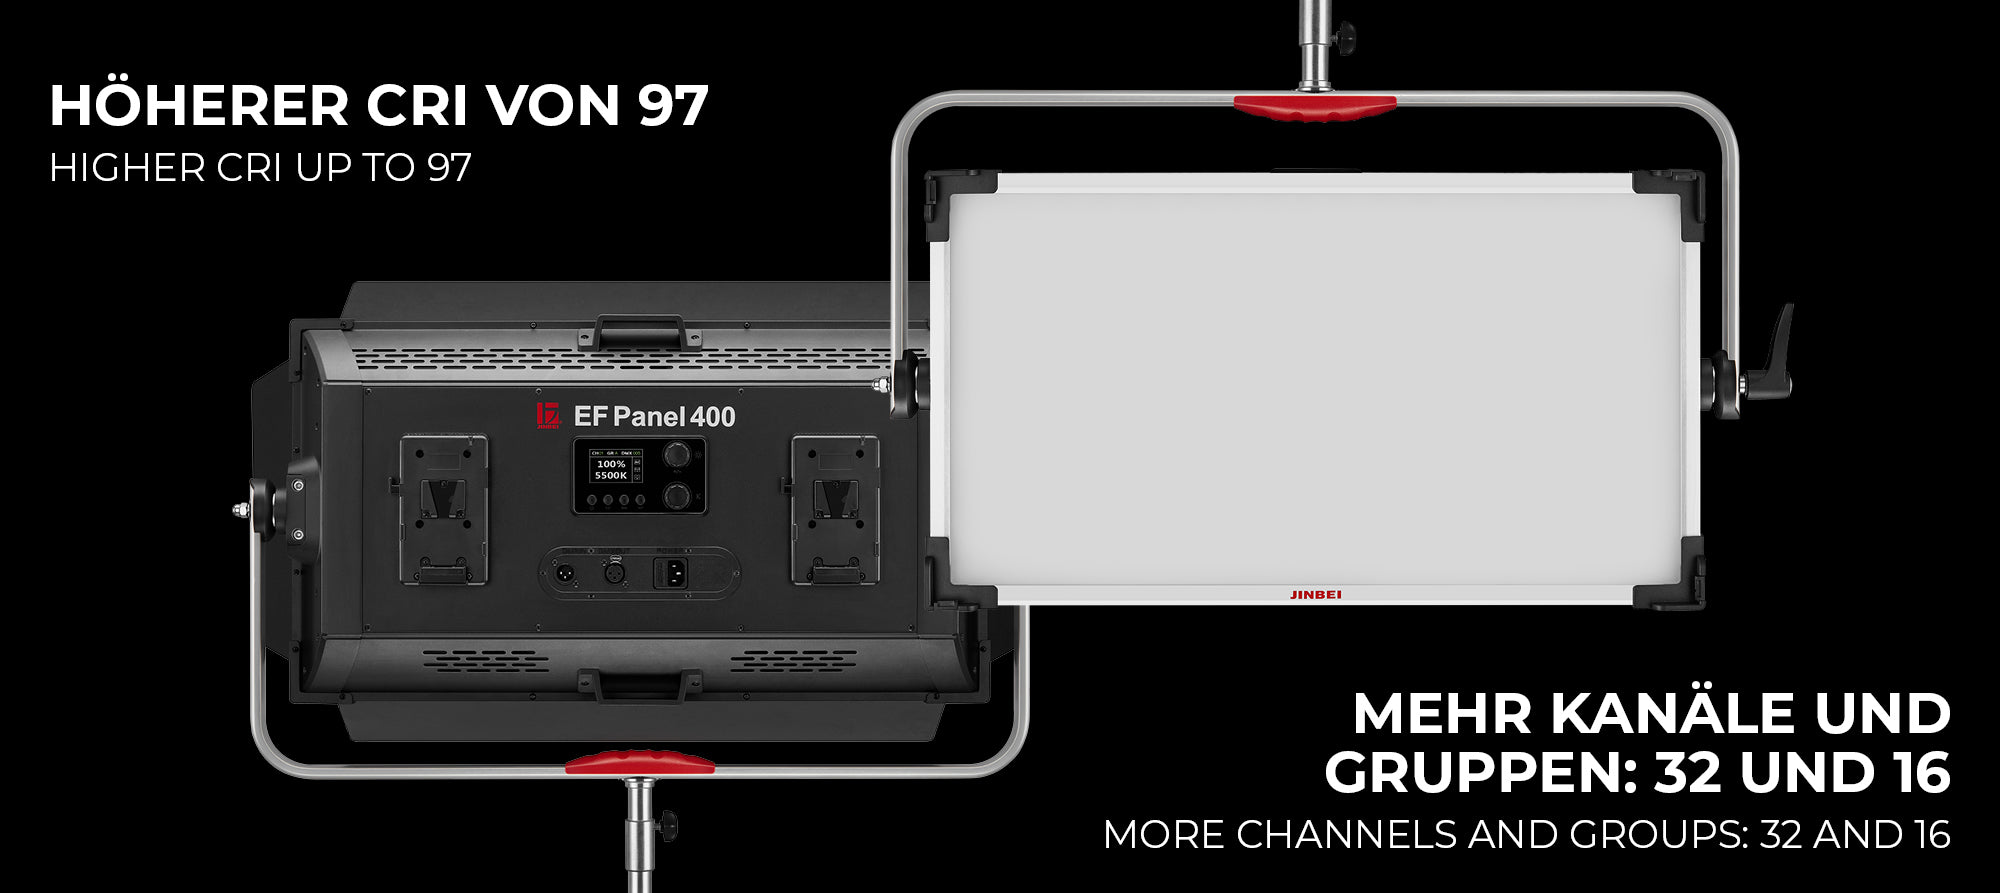 EFP-400 LED-Panel V2